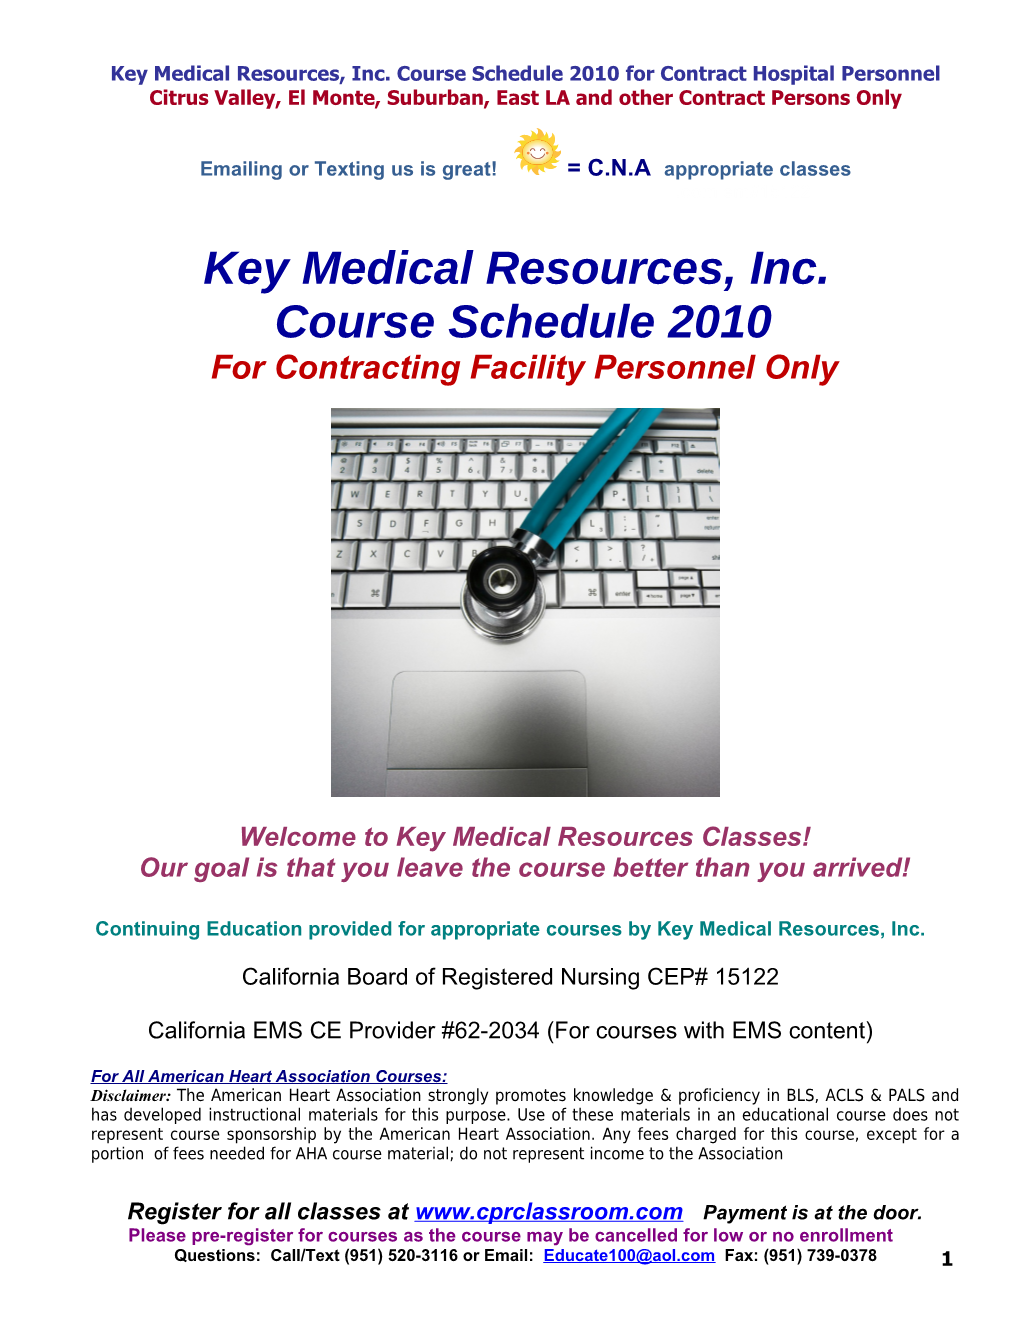 Key Medical Resources, Inc s1